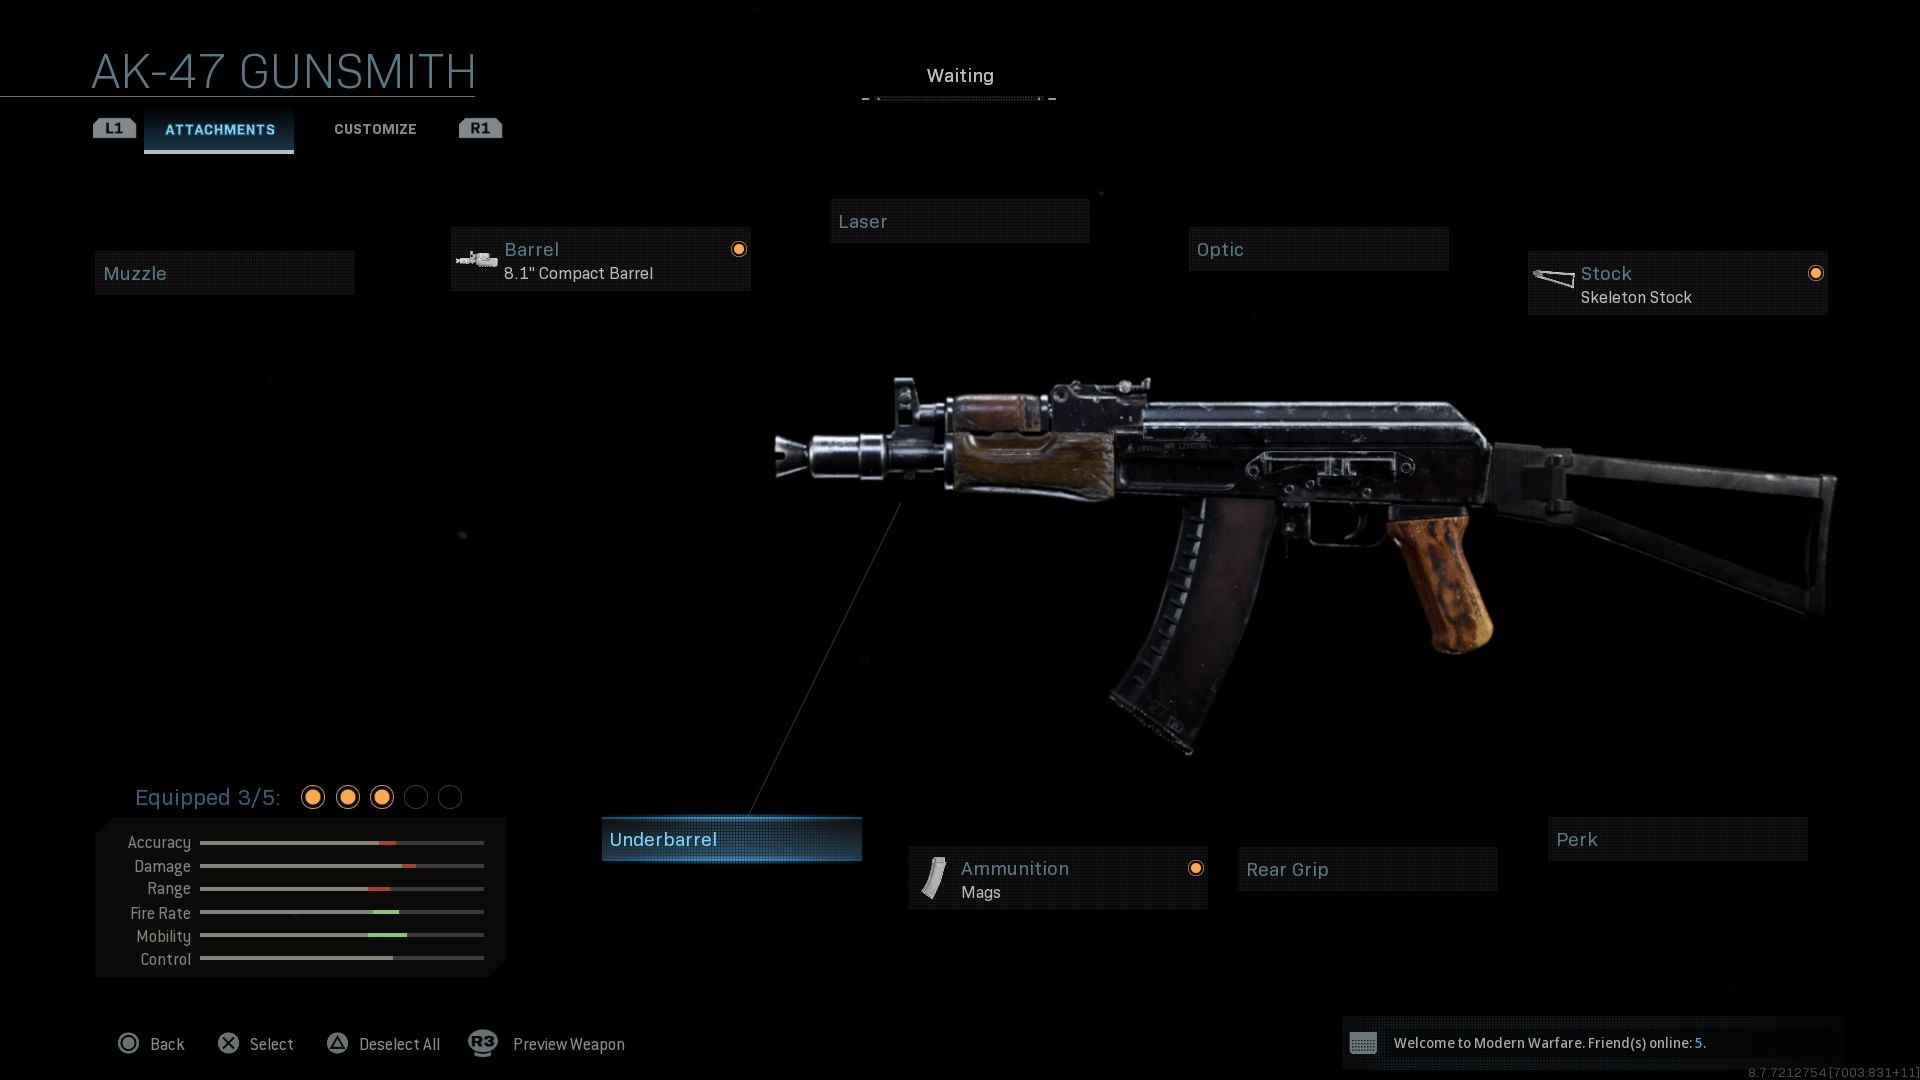 Call Of Duty Modern Warfare How To Build 5 Secret Weapons Ak 74u M16 More Ps4 Xbox Pc - modern weapon kit roblox